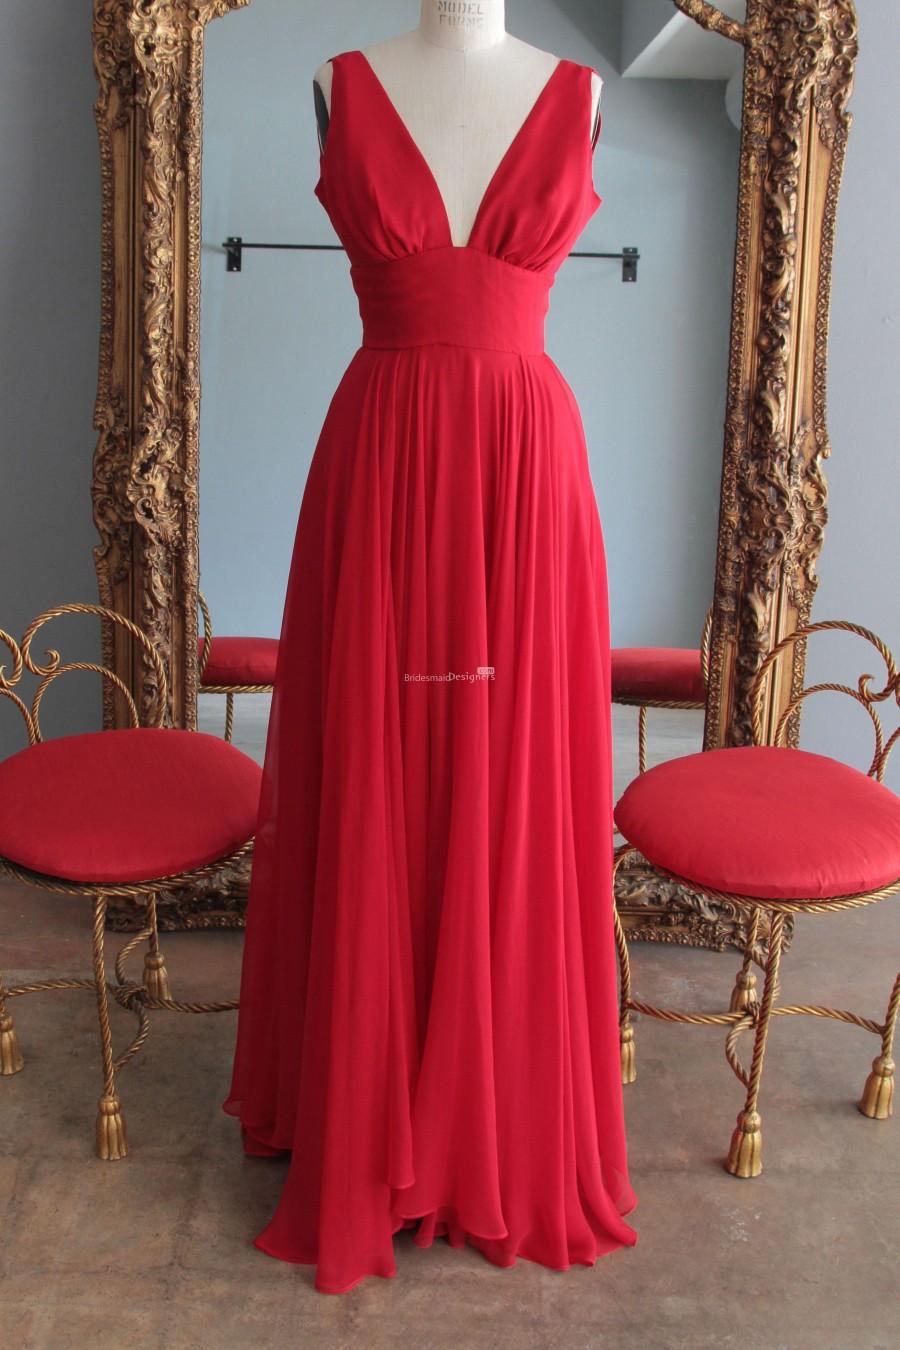 زفاف - Red Dress for Bridesmaid - BridesmaidDesigners